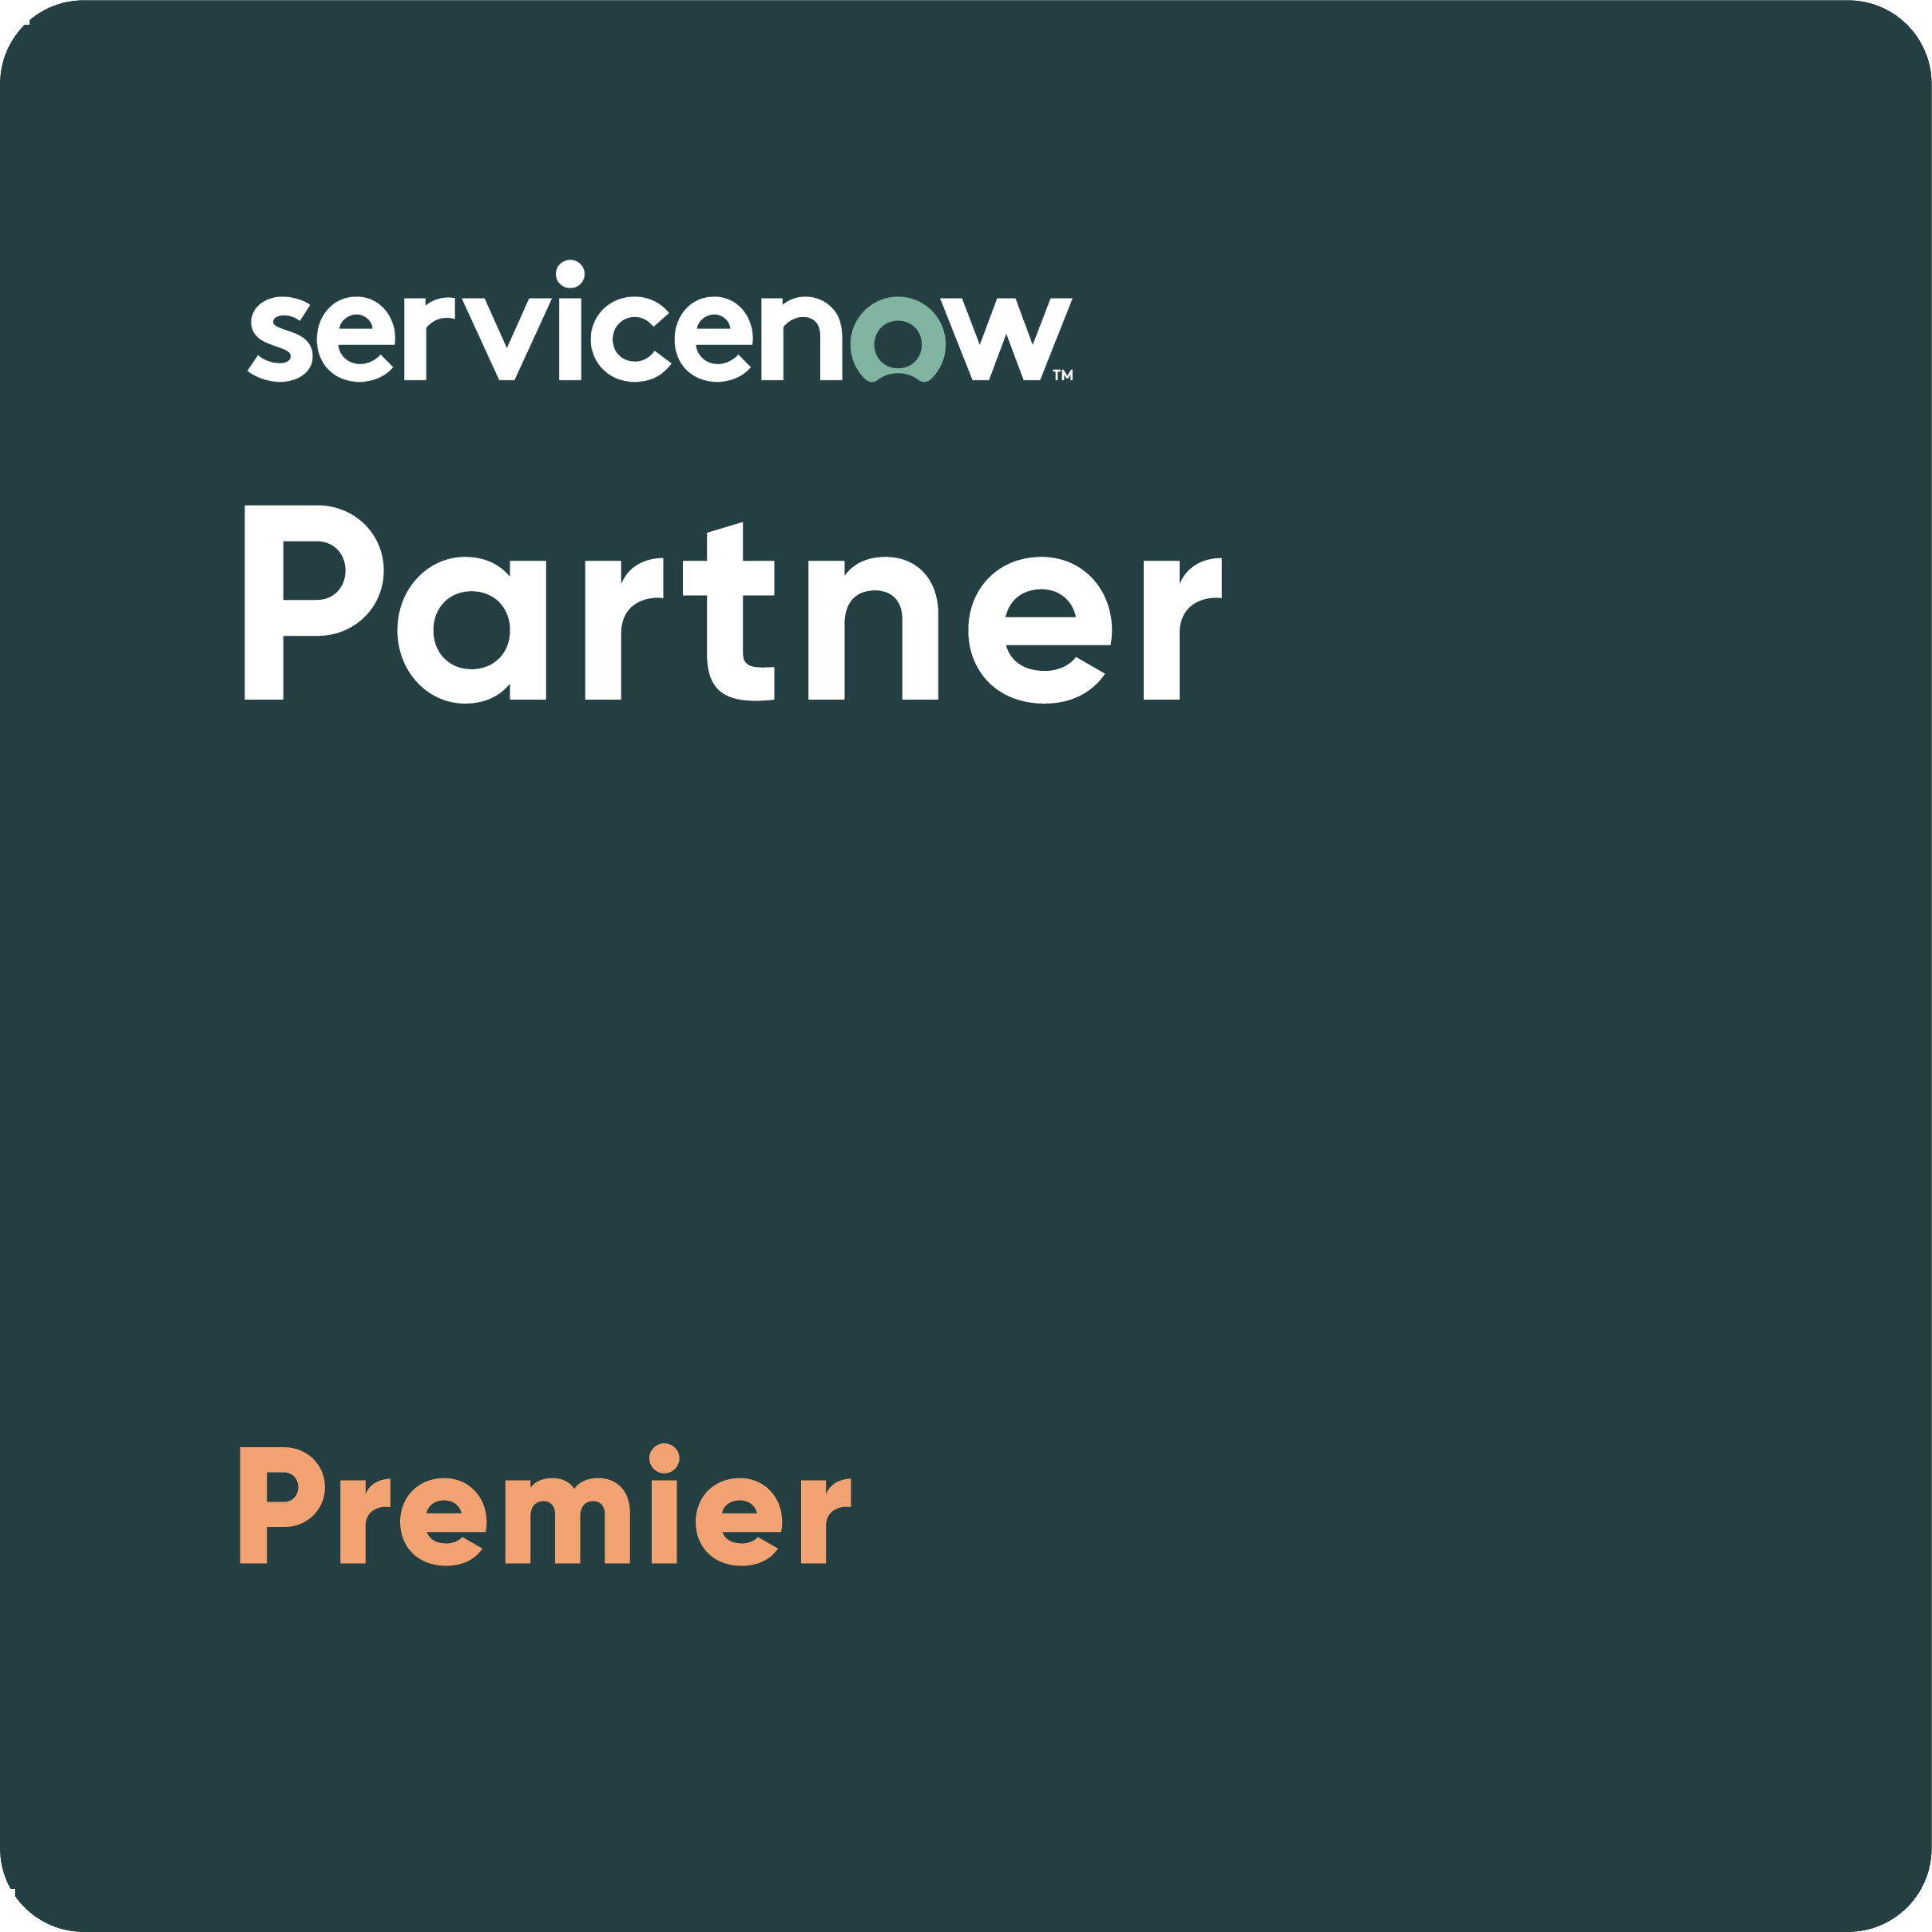 ServiceNow Premier Partner